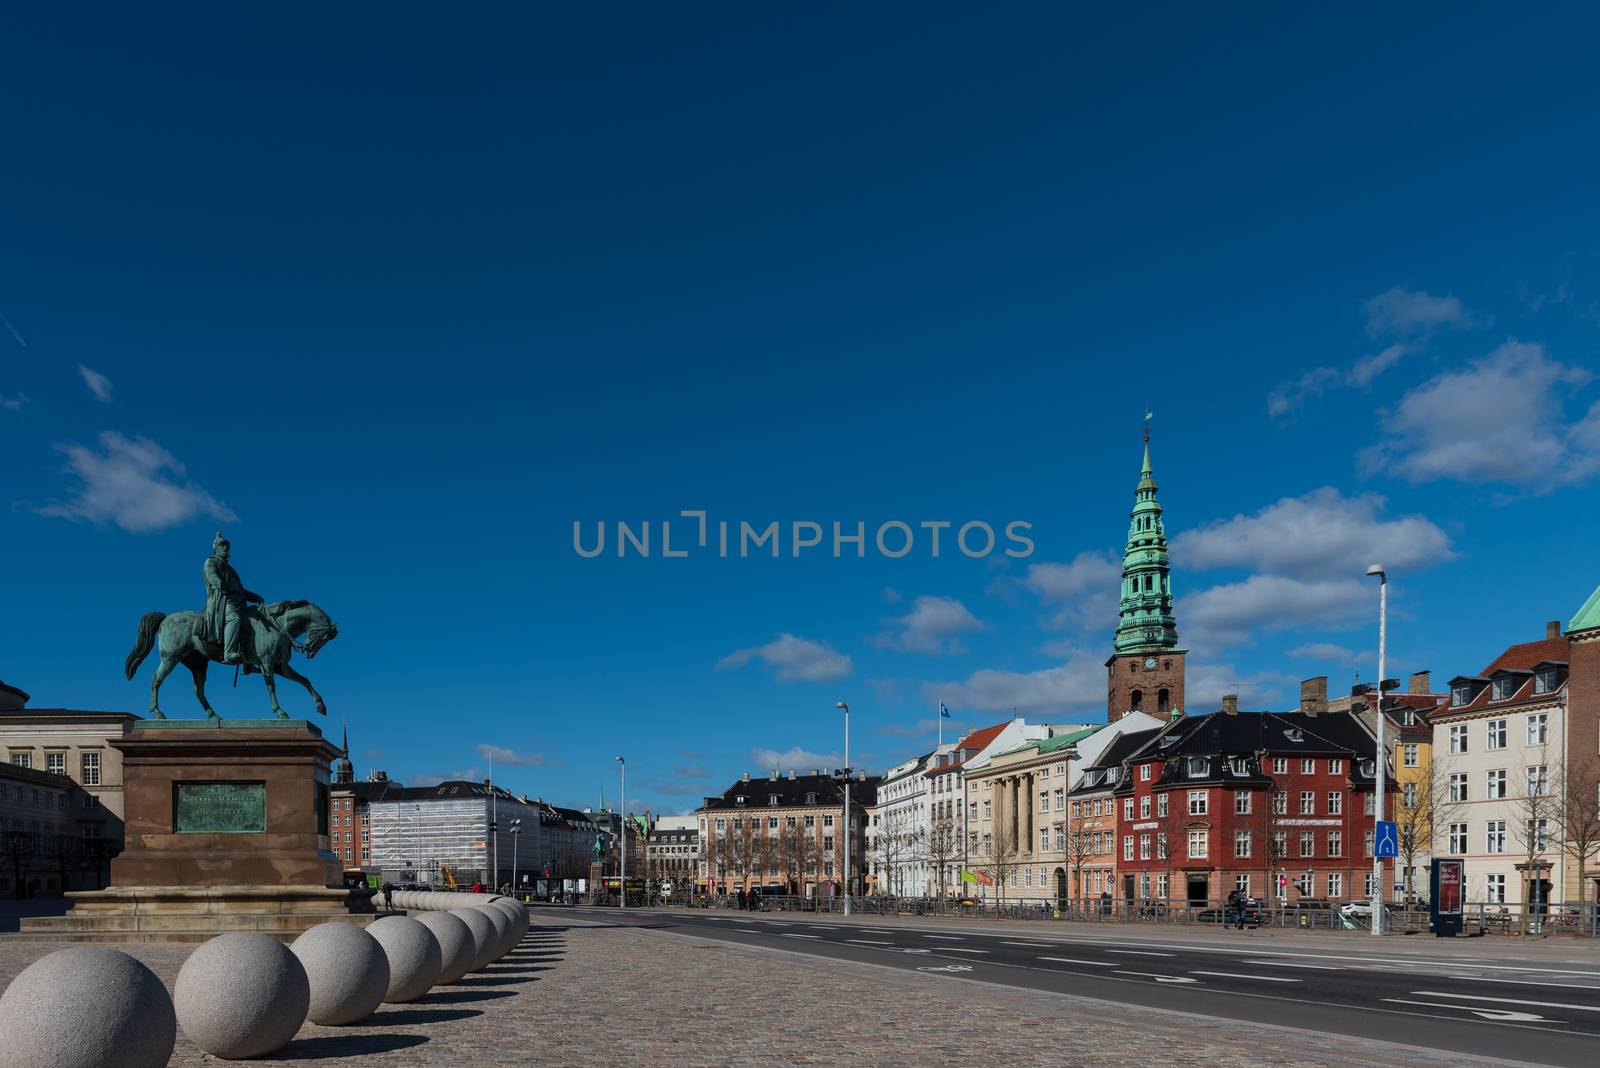 View from Christiansborg Slotsplads, Copenhagen city street by brambillasimone